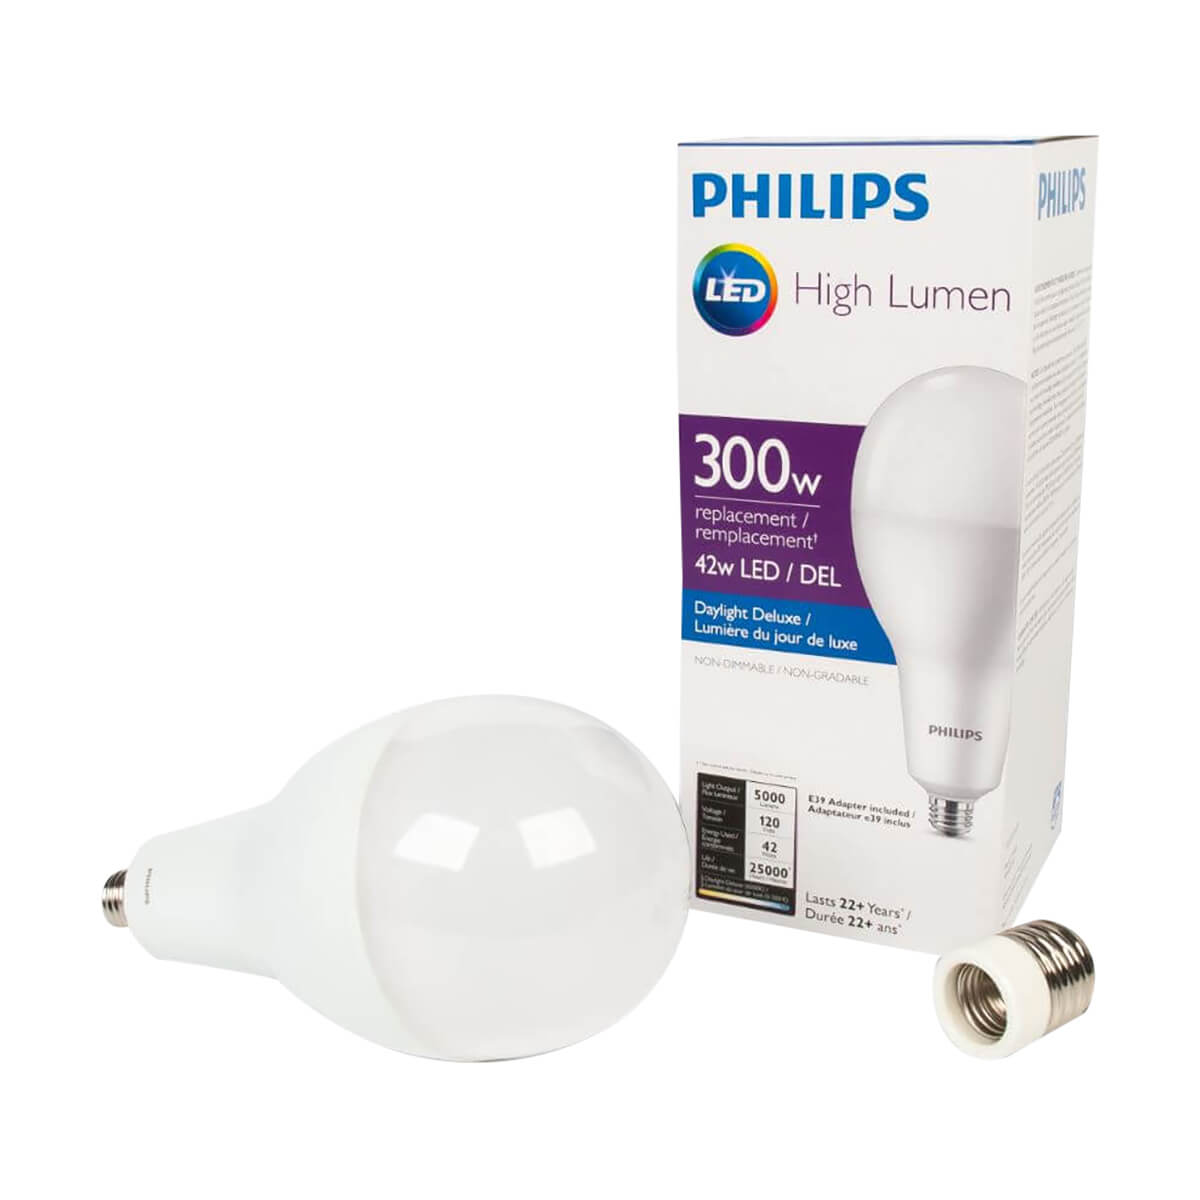 Phillips 300W / 42W Equivalent LED High Lumen Bulb